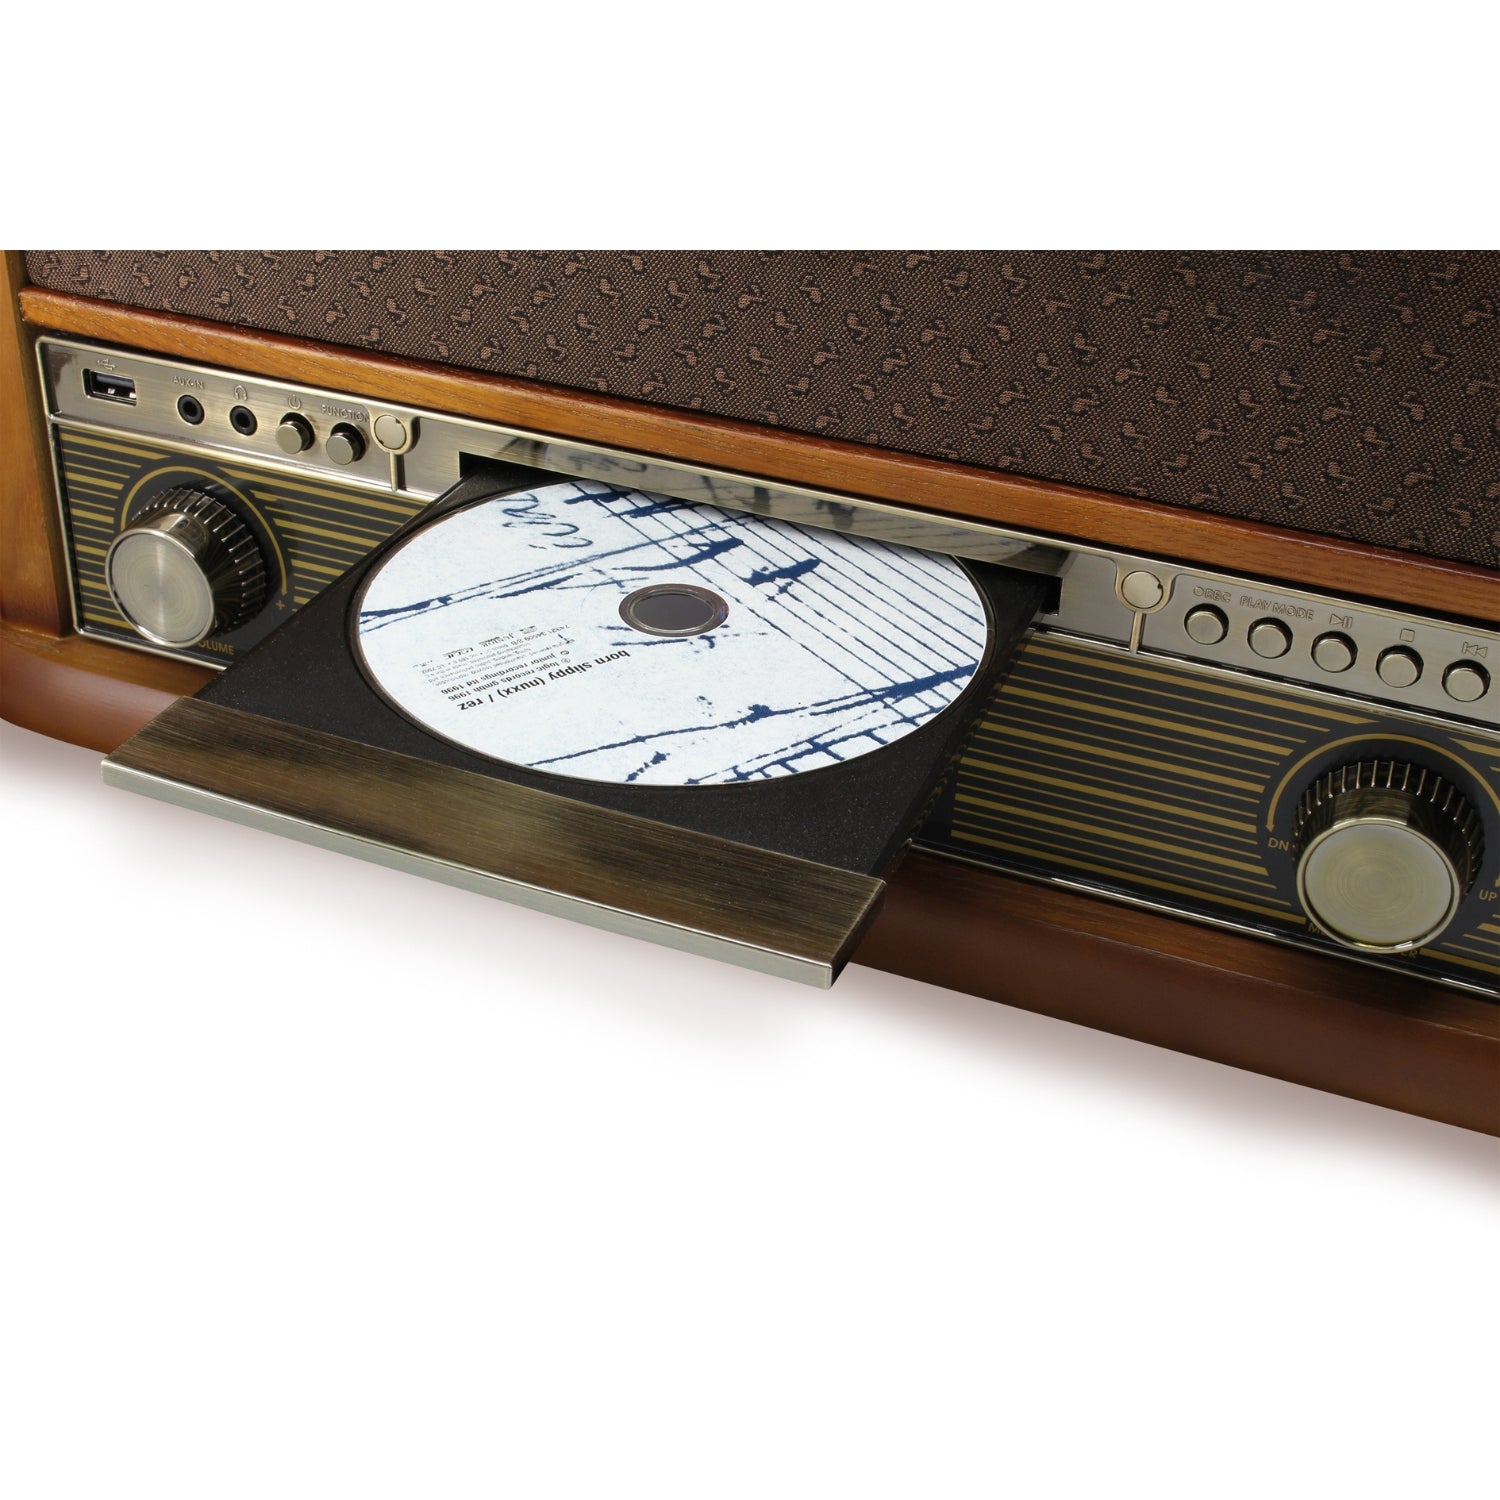 B-WARE Soundmaster NR560 Nostalgie Stereoanlage Kompaktanlage Plattenspieler CD-Player MP3 USB Encoding Kassettenspieler 75-Ohm Anschluss